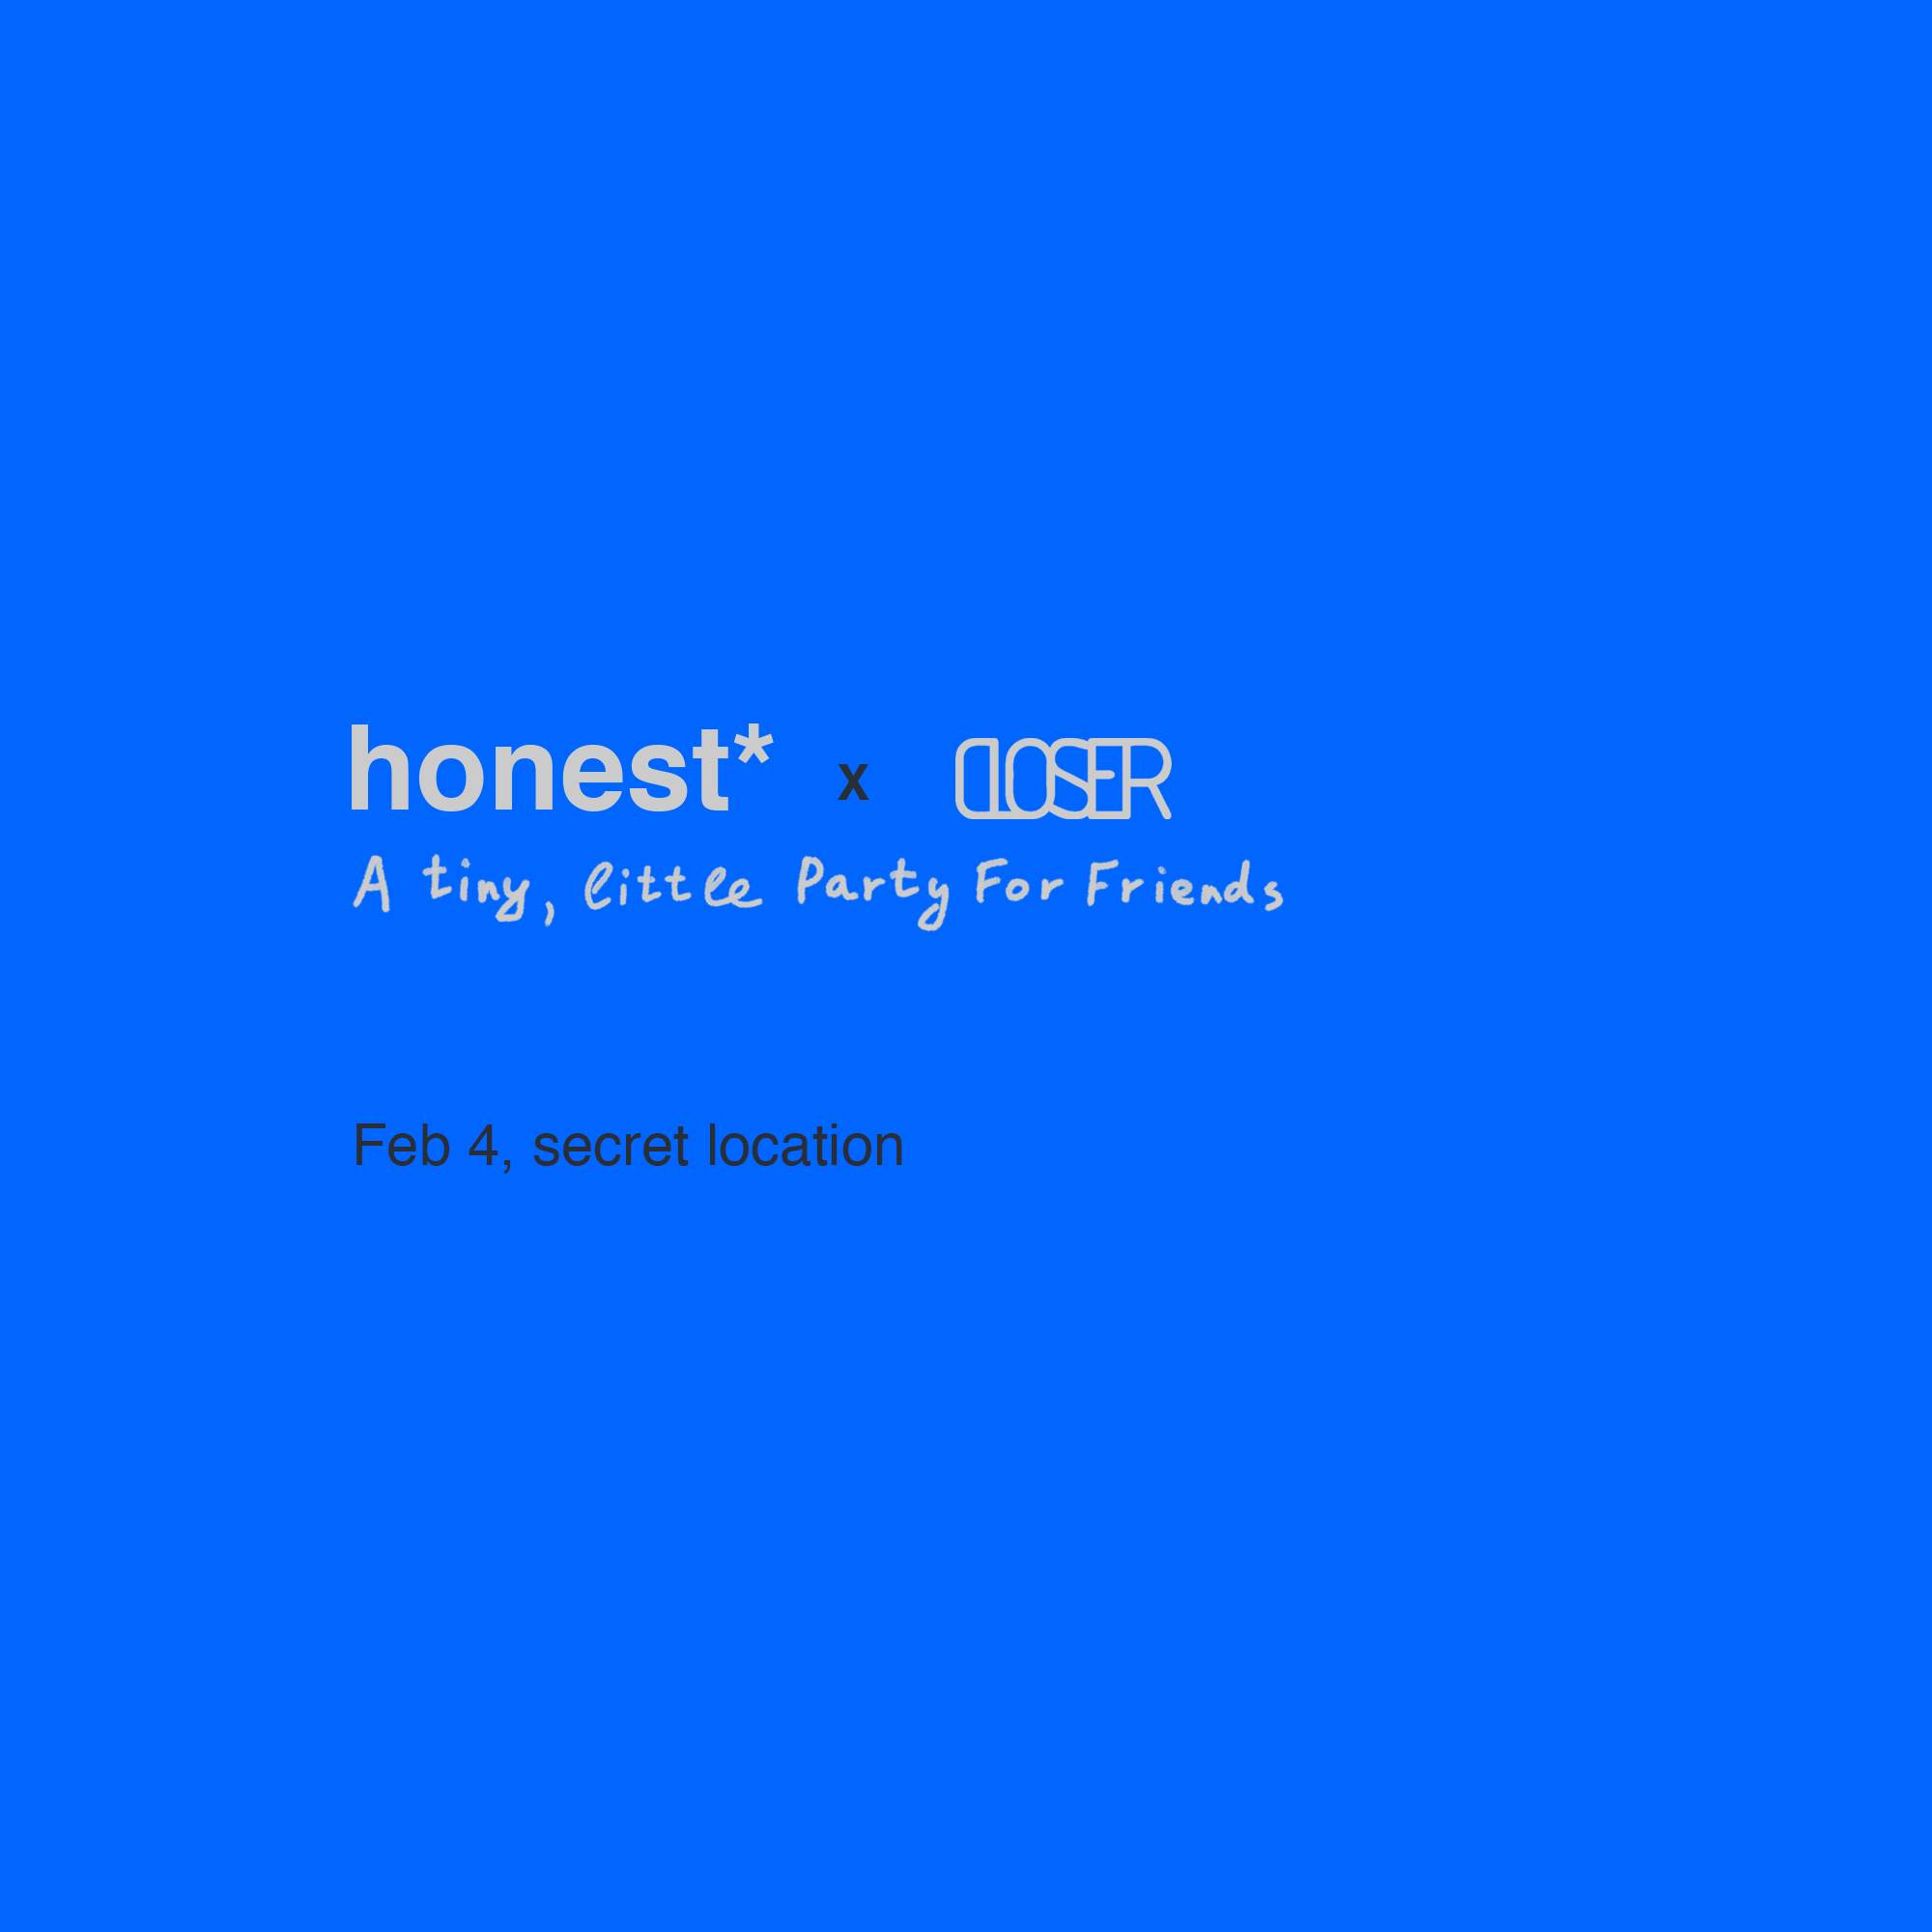 Honest x Closer - フライヤー表